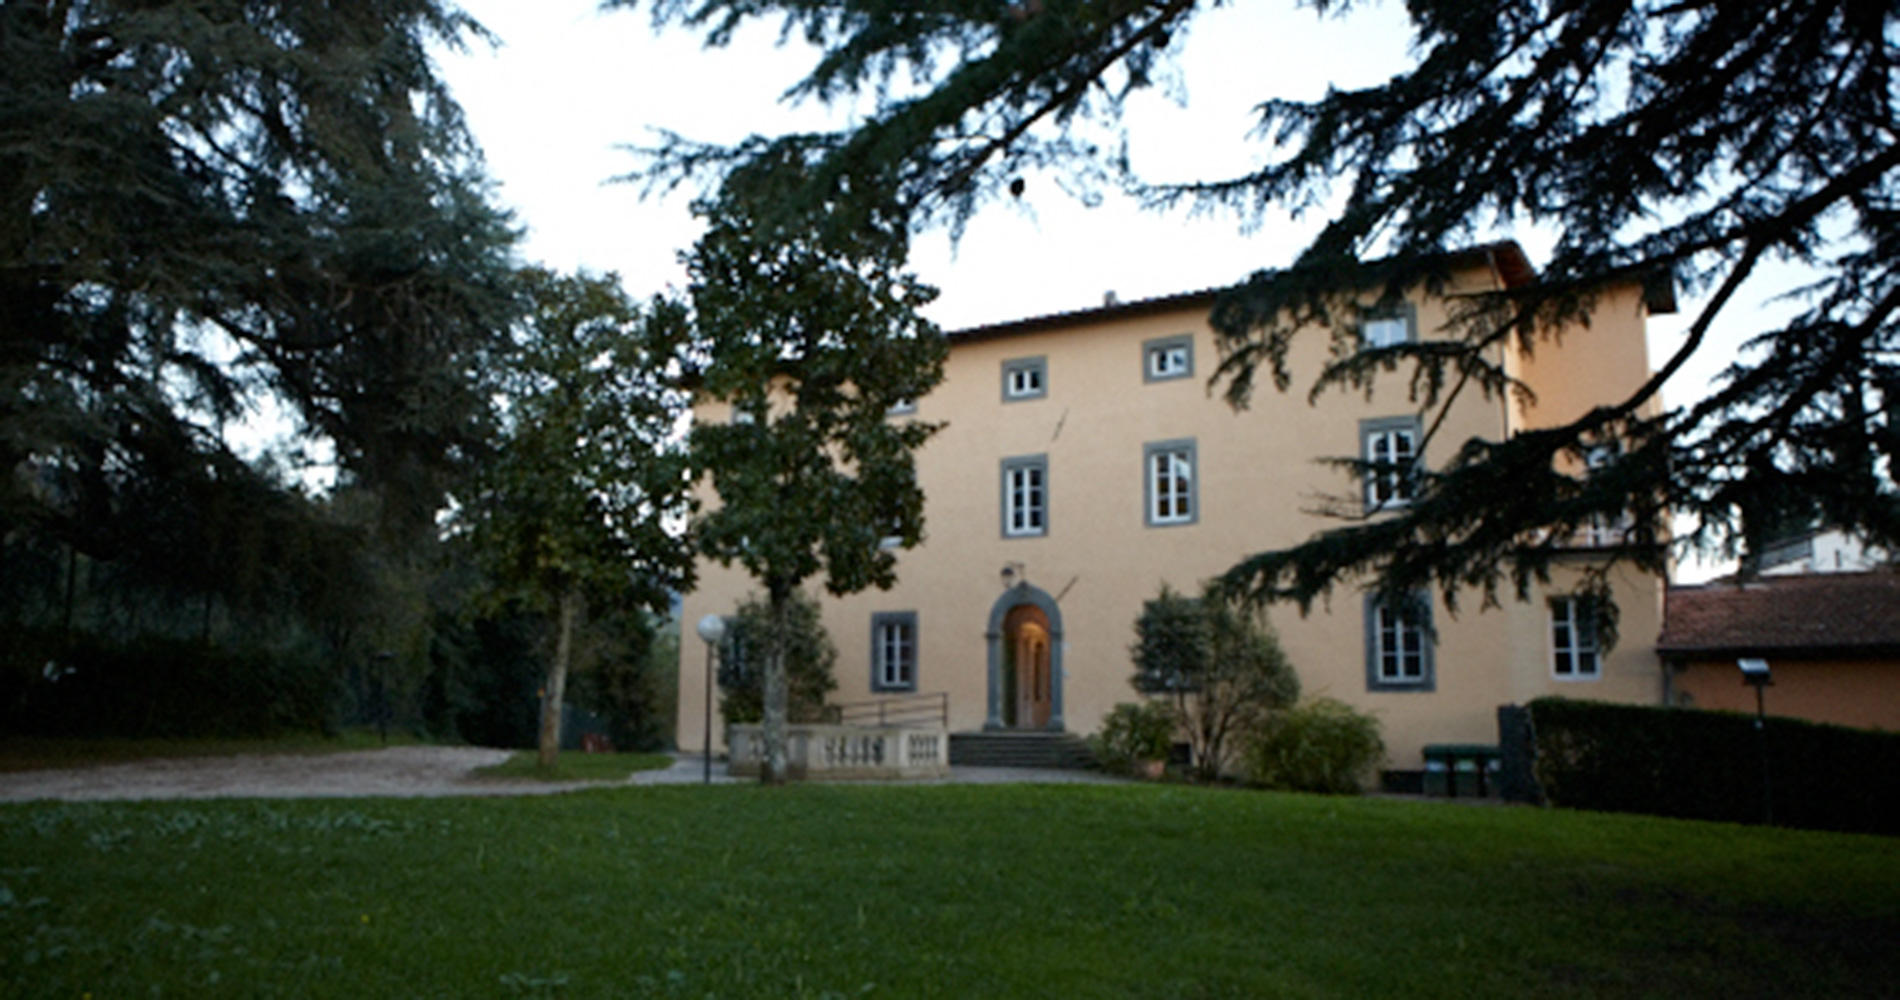 Foto Villa Gherardi